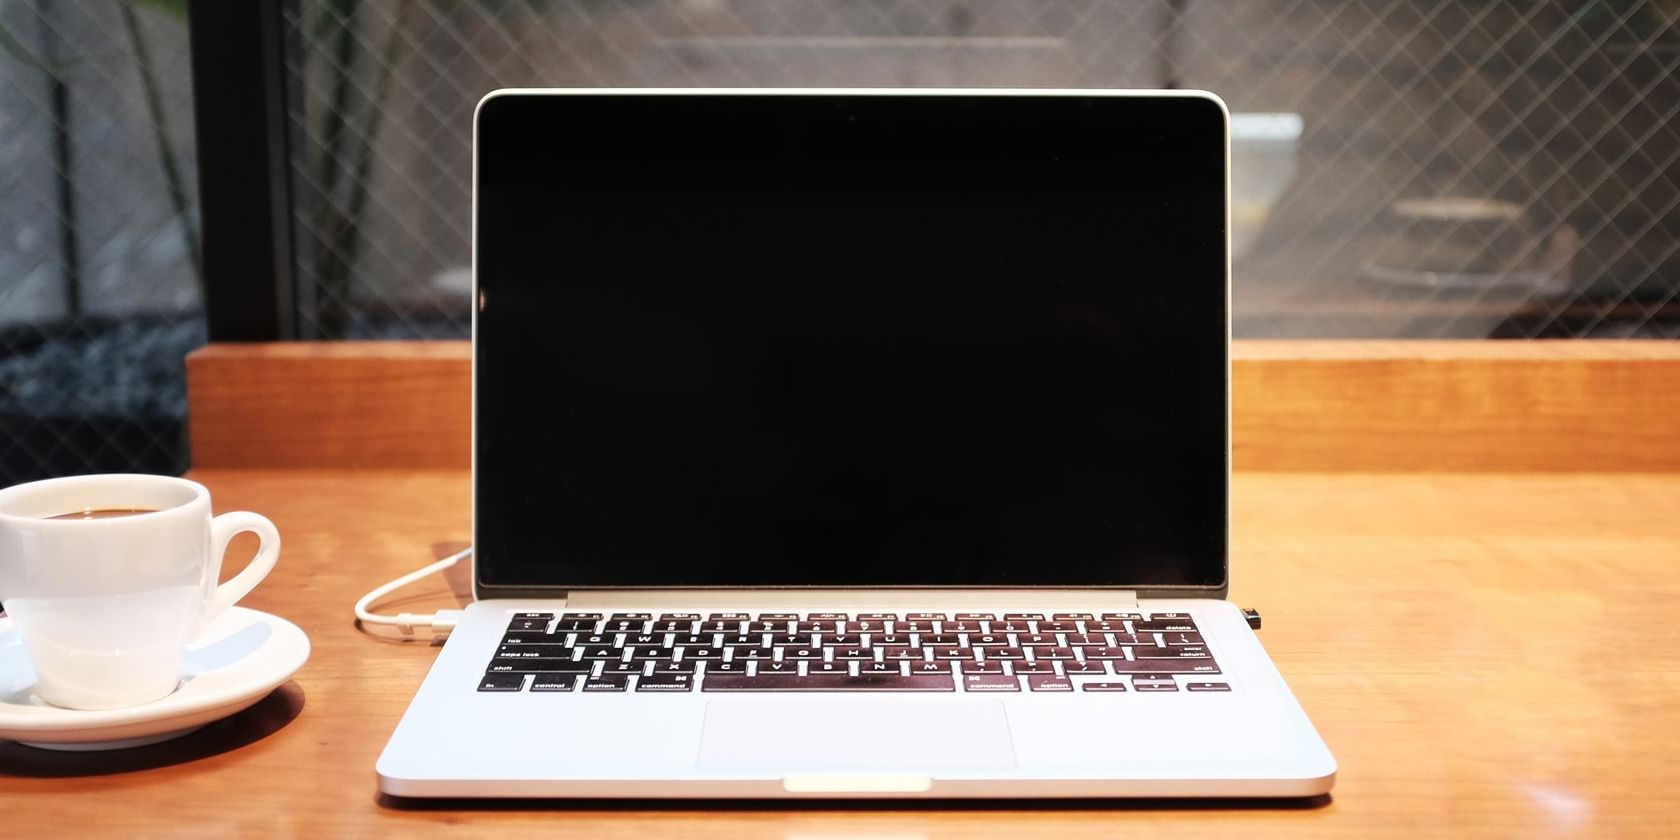 Macbook sitting on desk with a coffee mug.